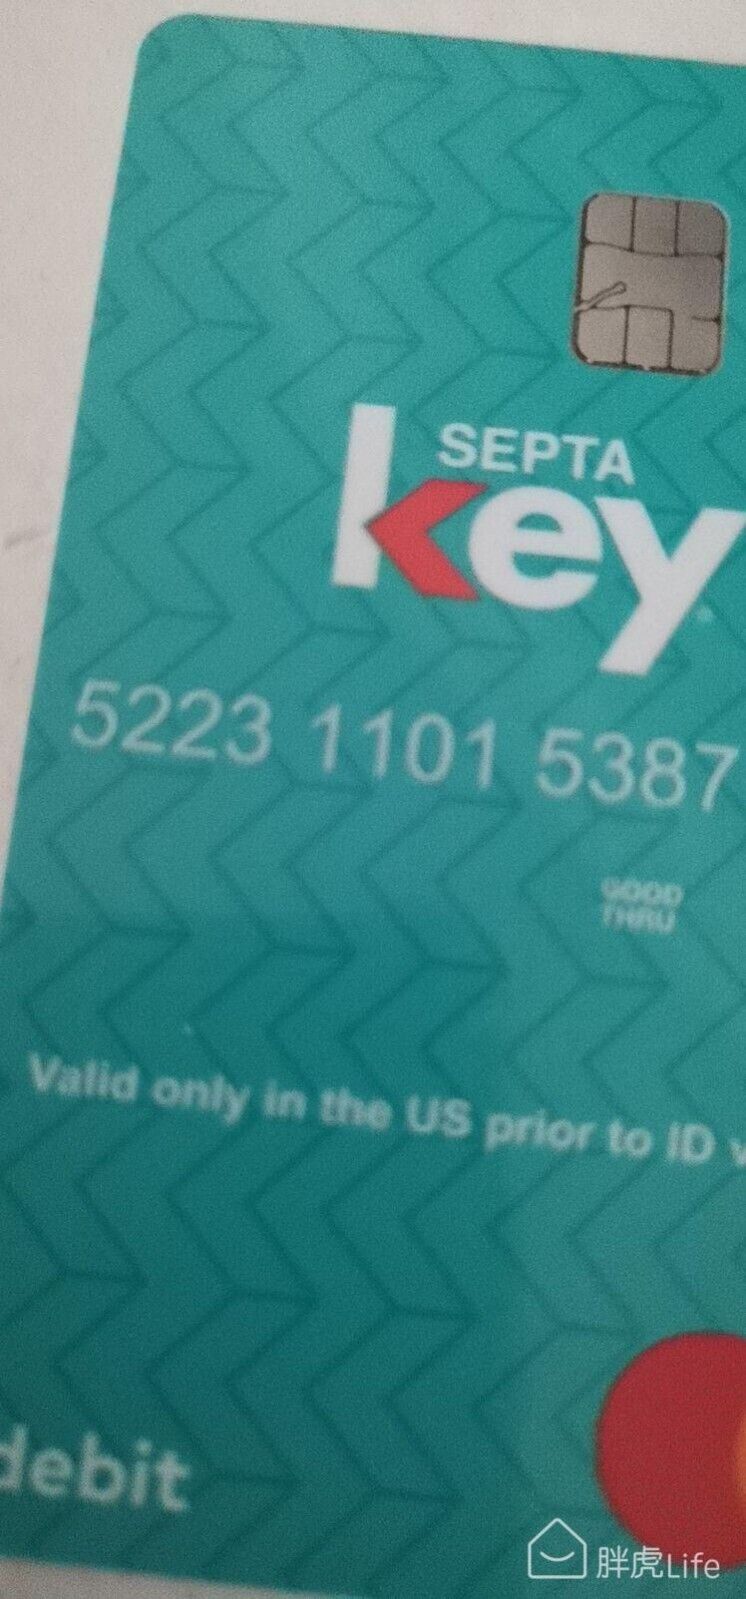 SEPTA key card